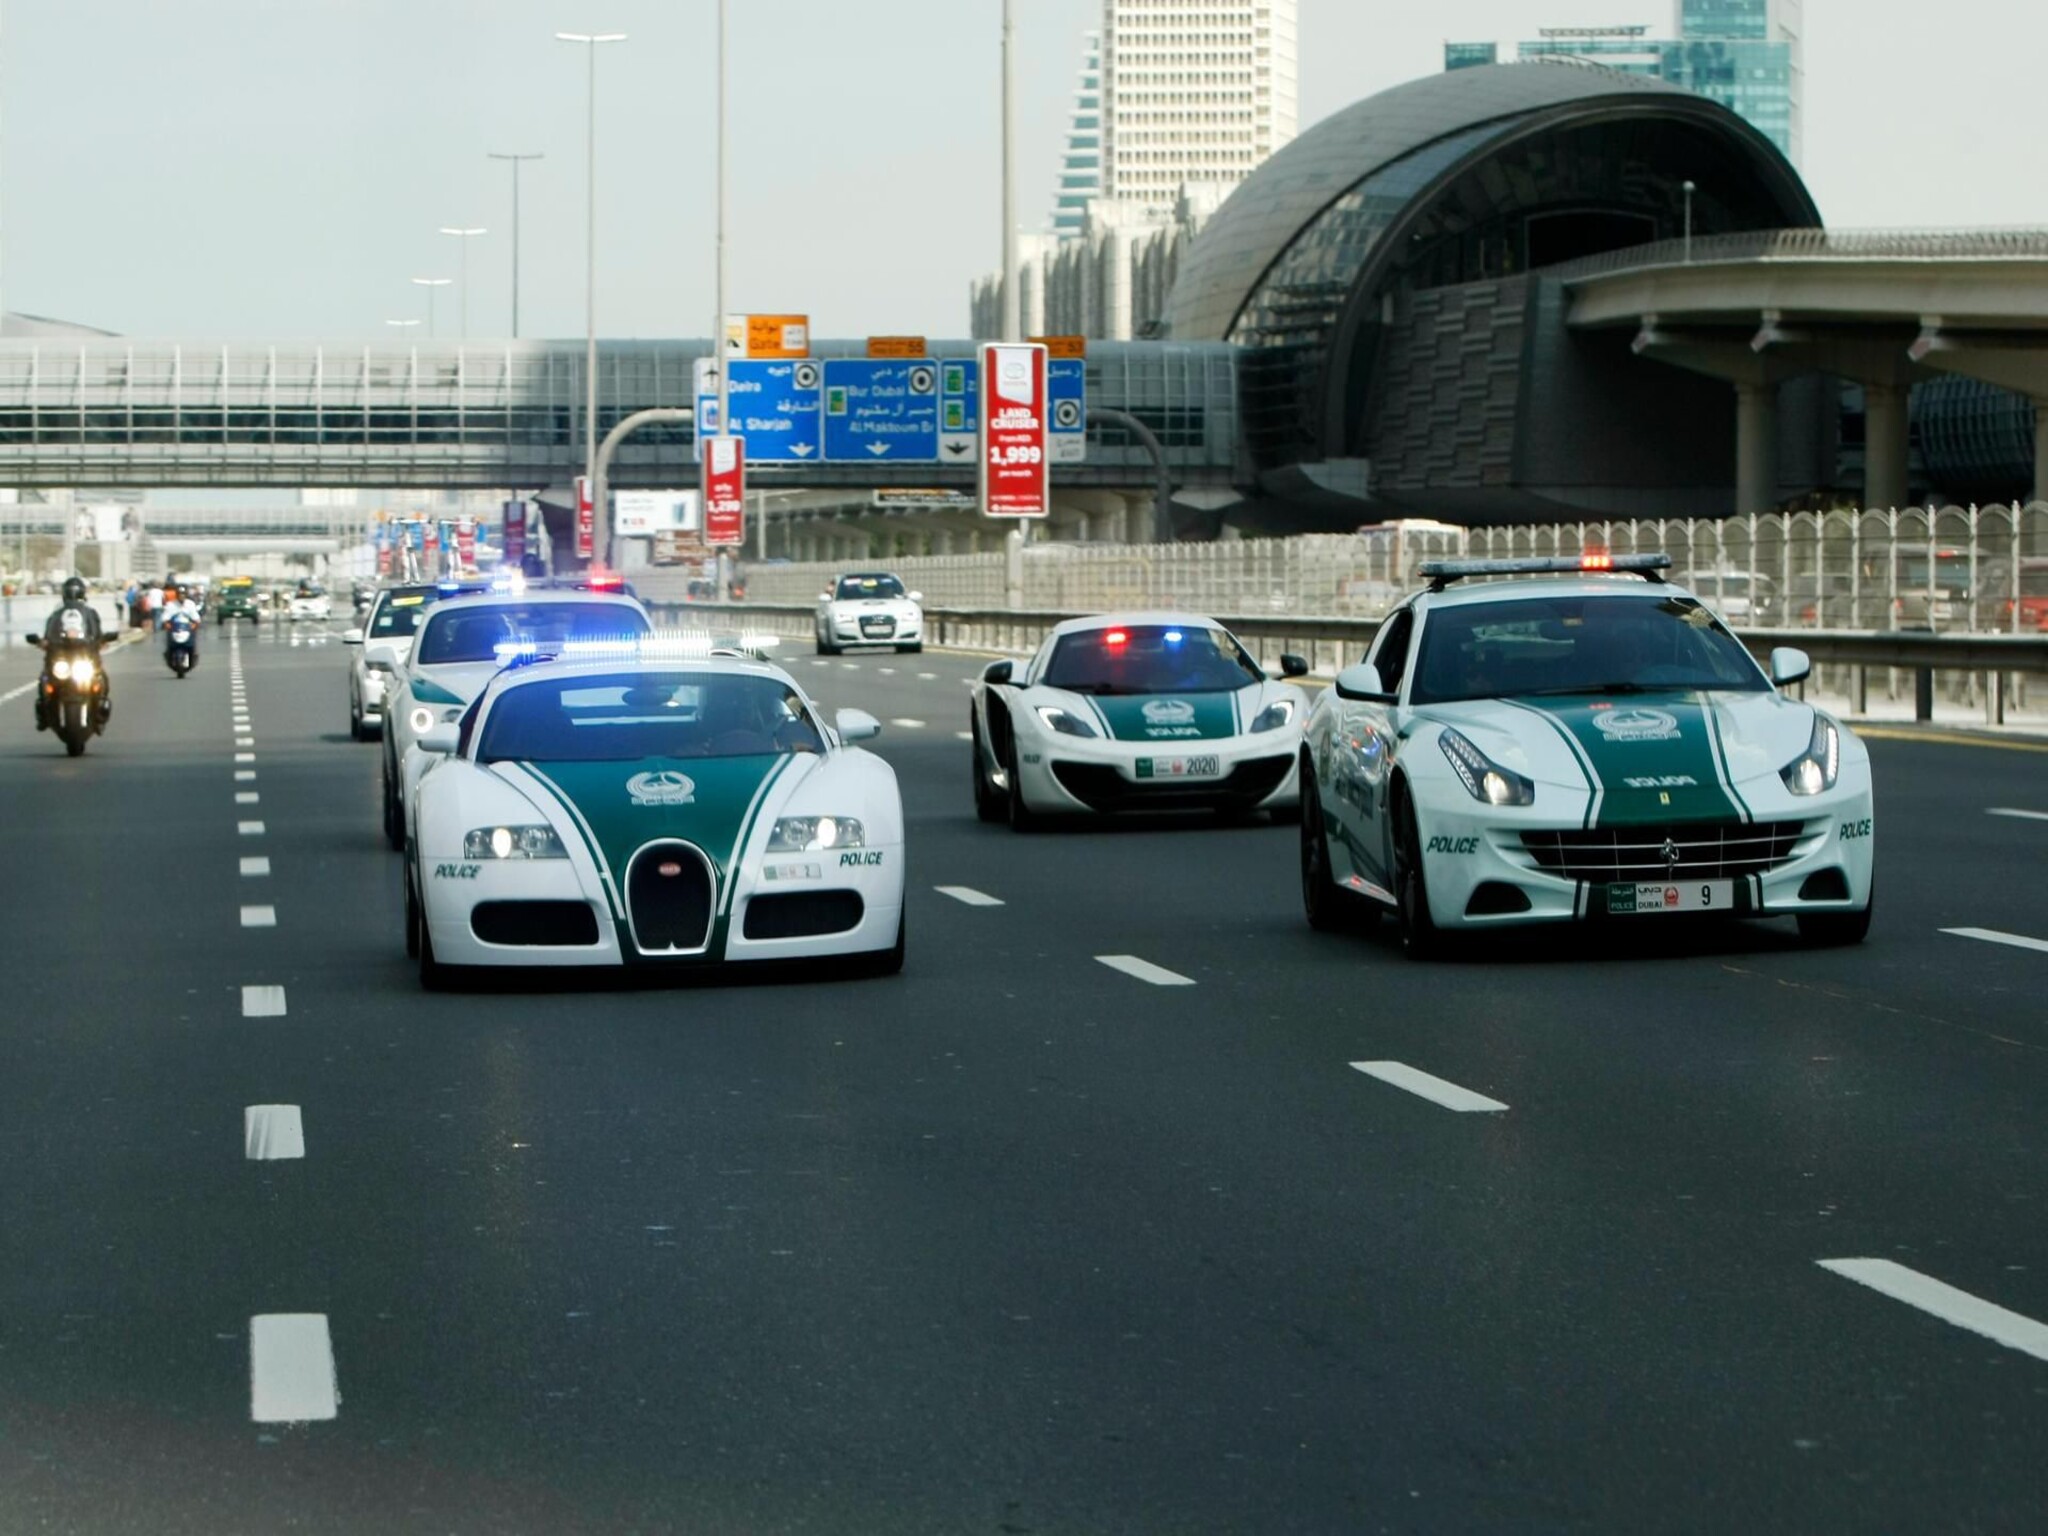 ِالشرطة الإماراتية تحذر جميع السائقين من عقوبة بعض السلوكيات المحظورة في القيادة